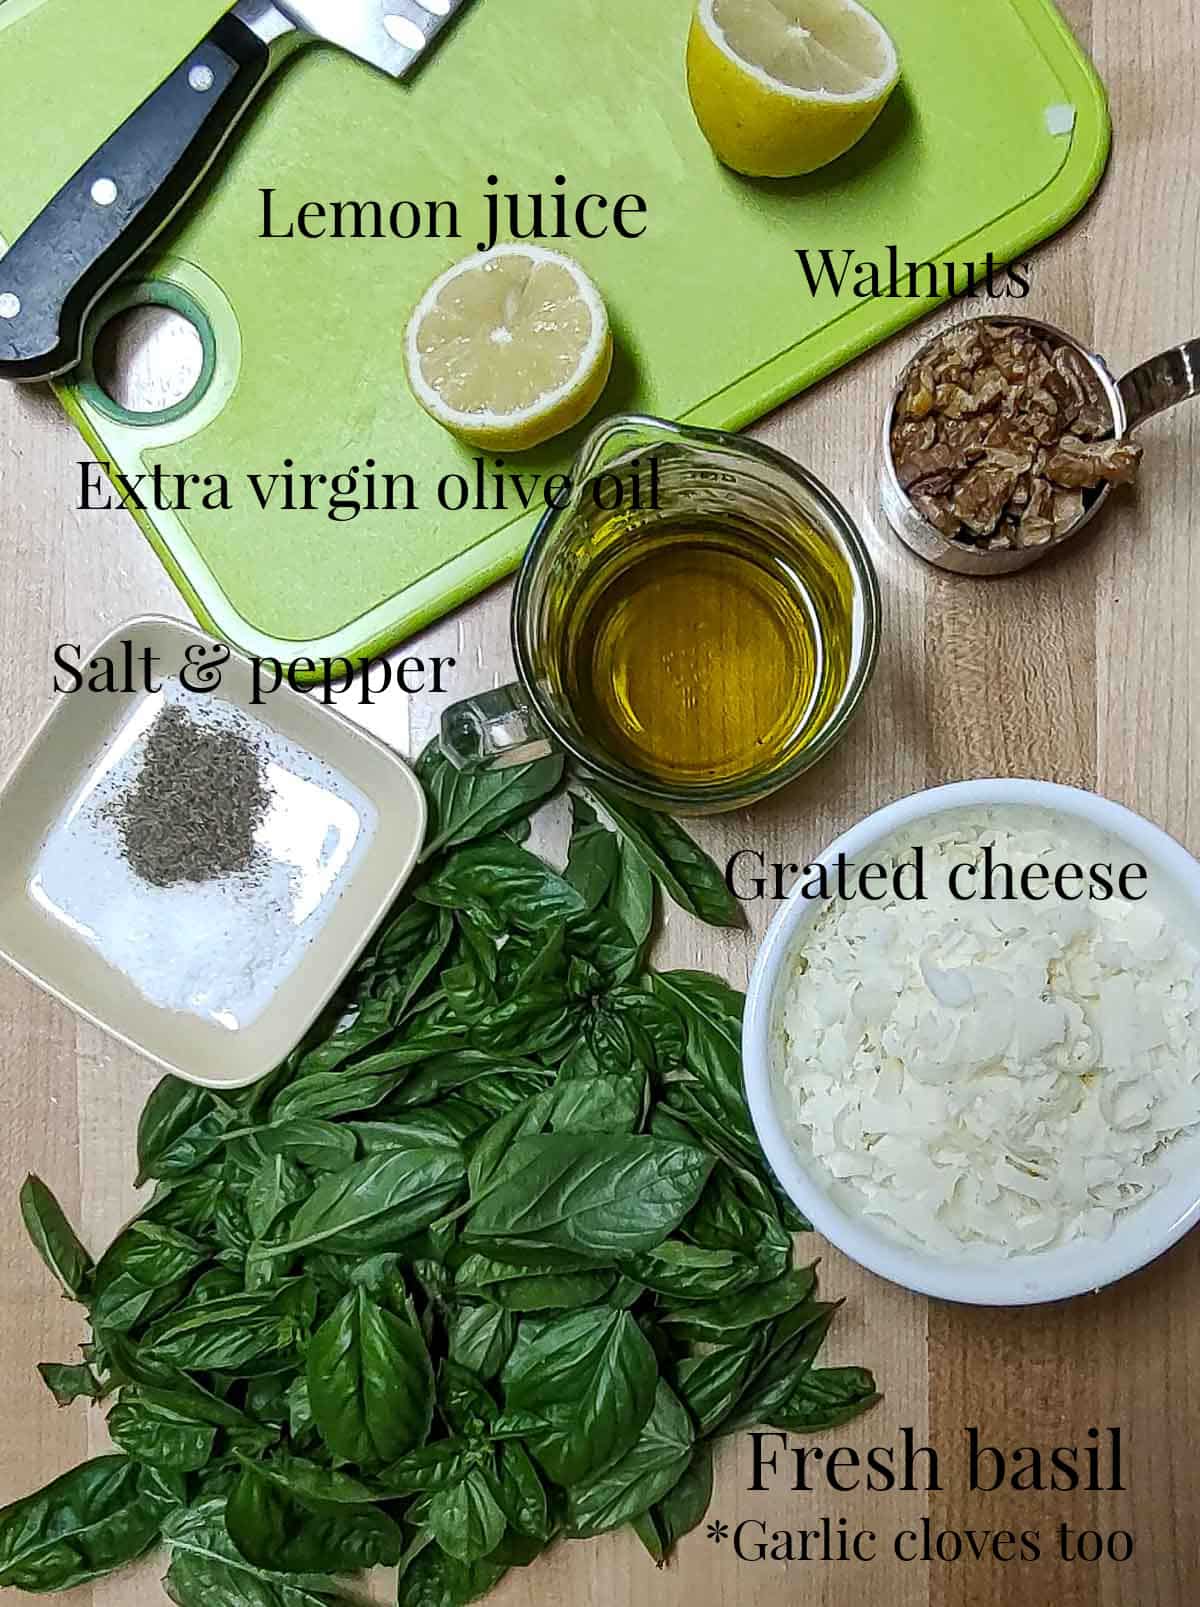 Labeled ingredients for basil pesto.